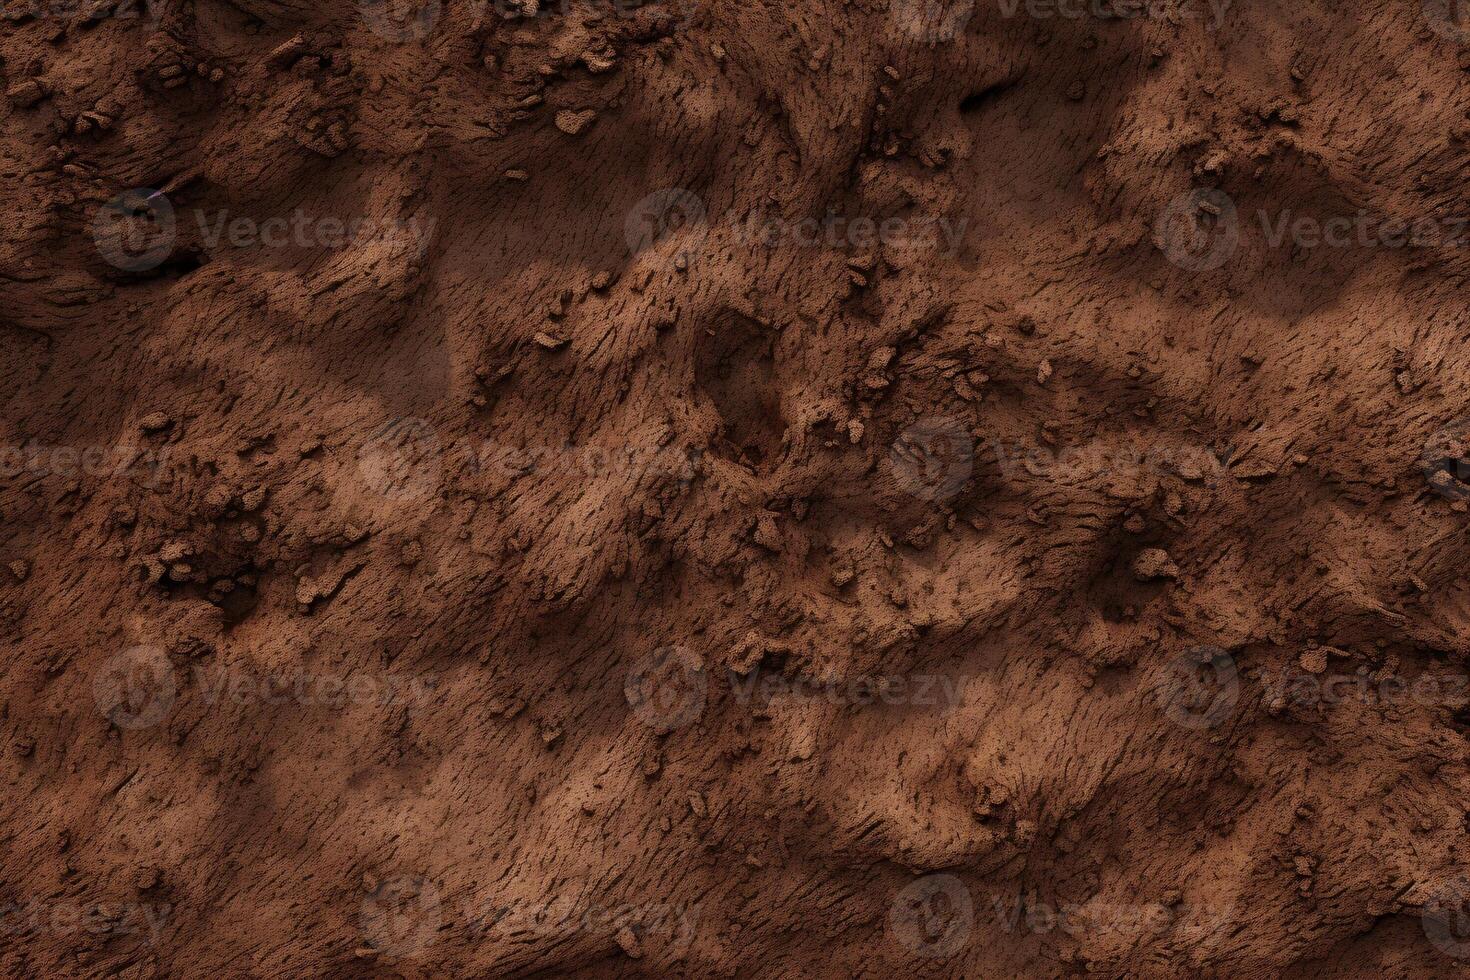 Soil Texture, Soil Texture Background, Soil dirt texture, ground surface Texture, Rustic Soil Texture, land brown soil texture, Fertile soil texture background, photo